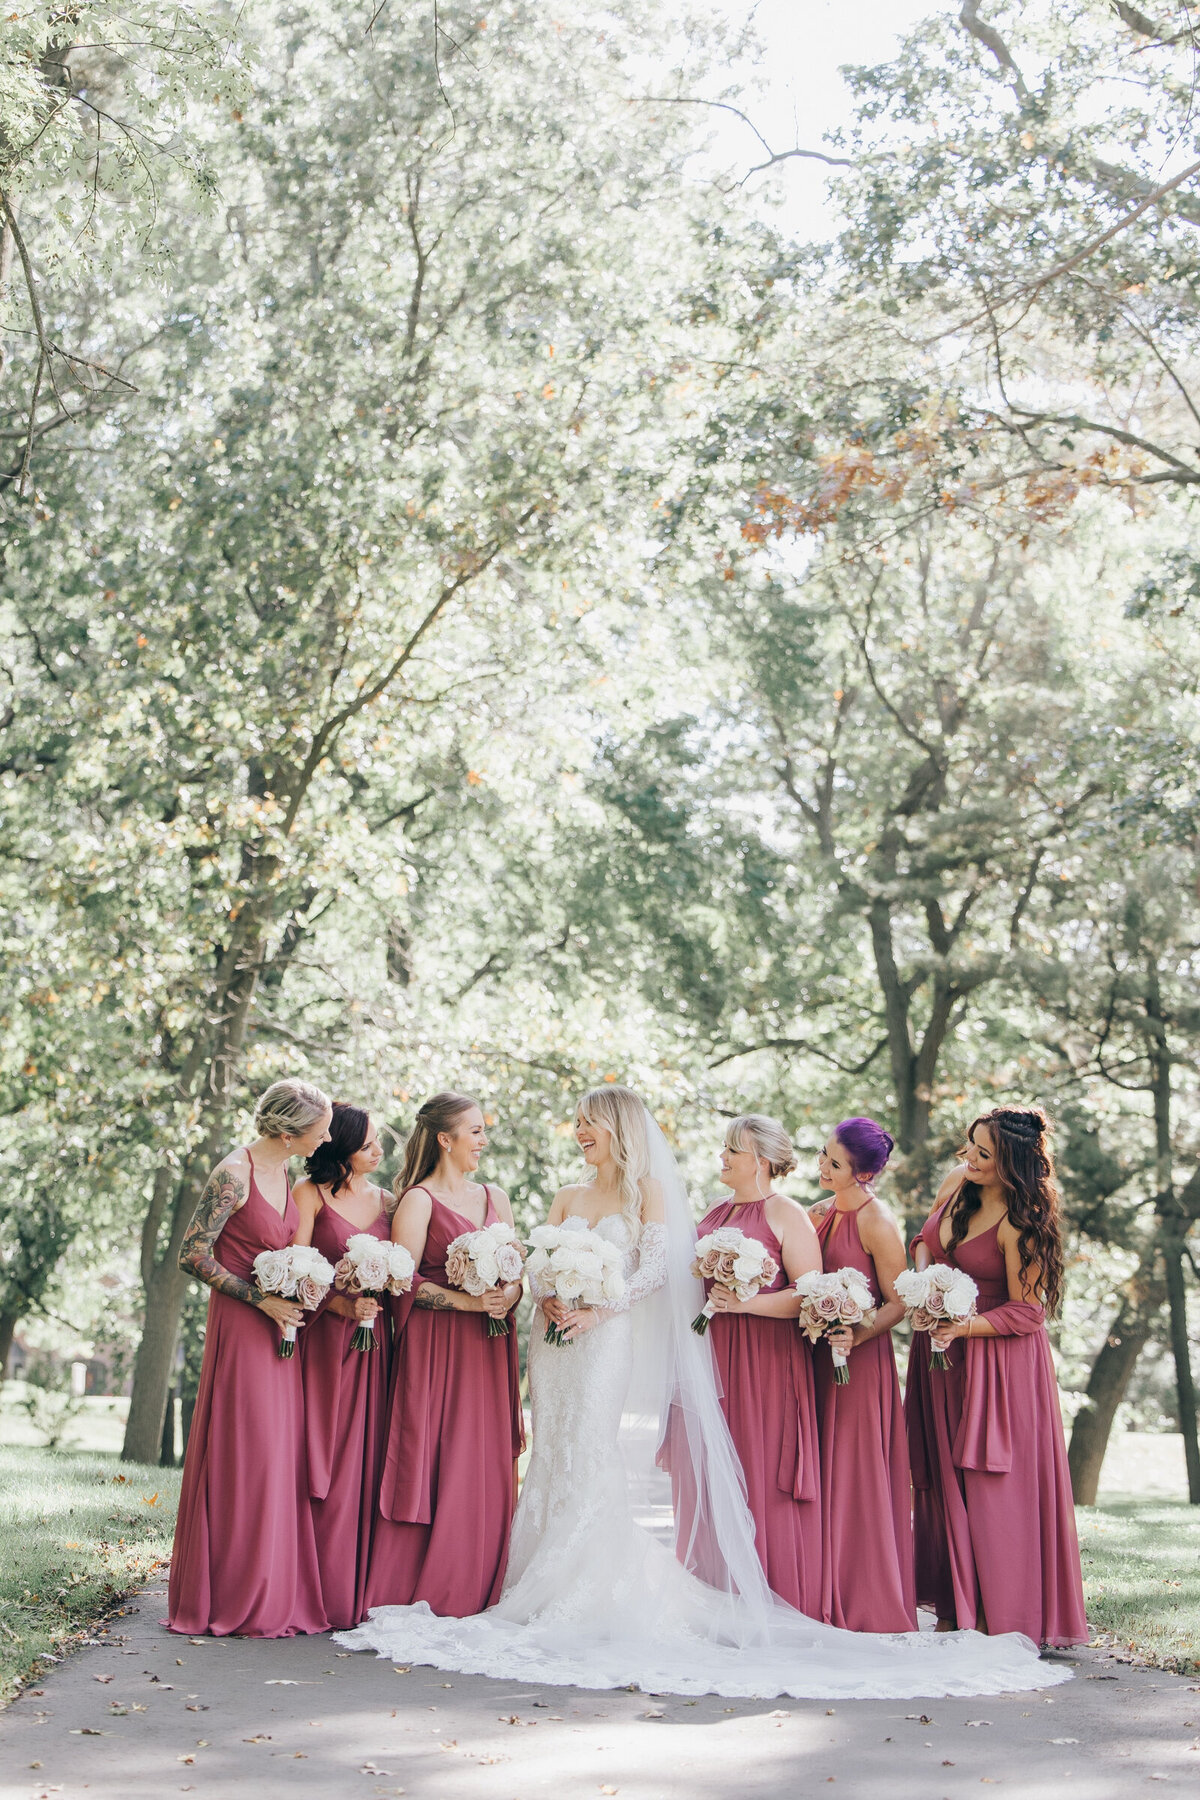 Bridesmaids wearing pink surround glamorous bride in lace